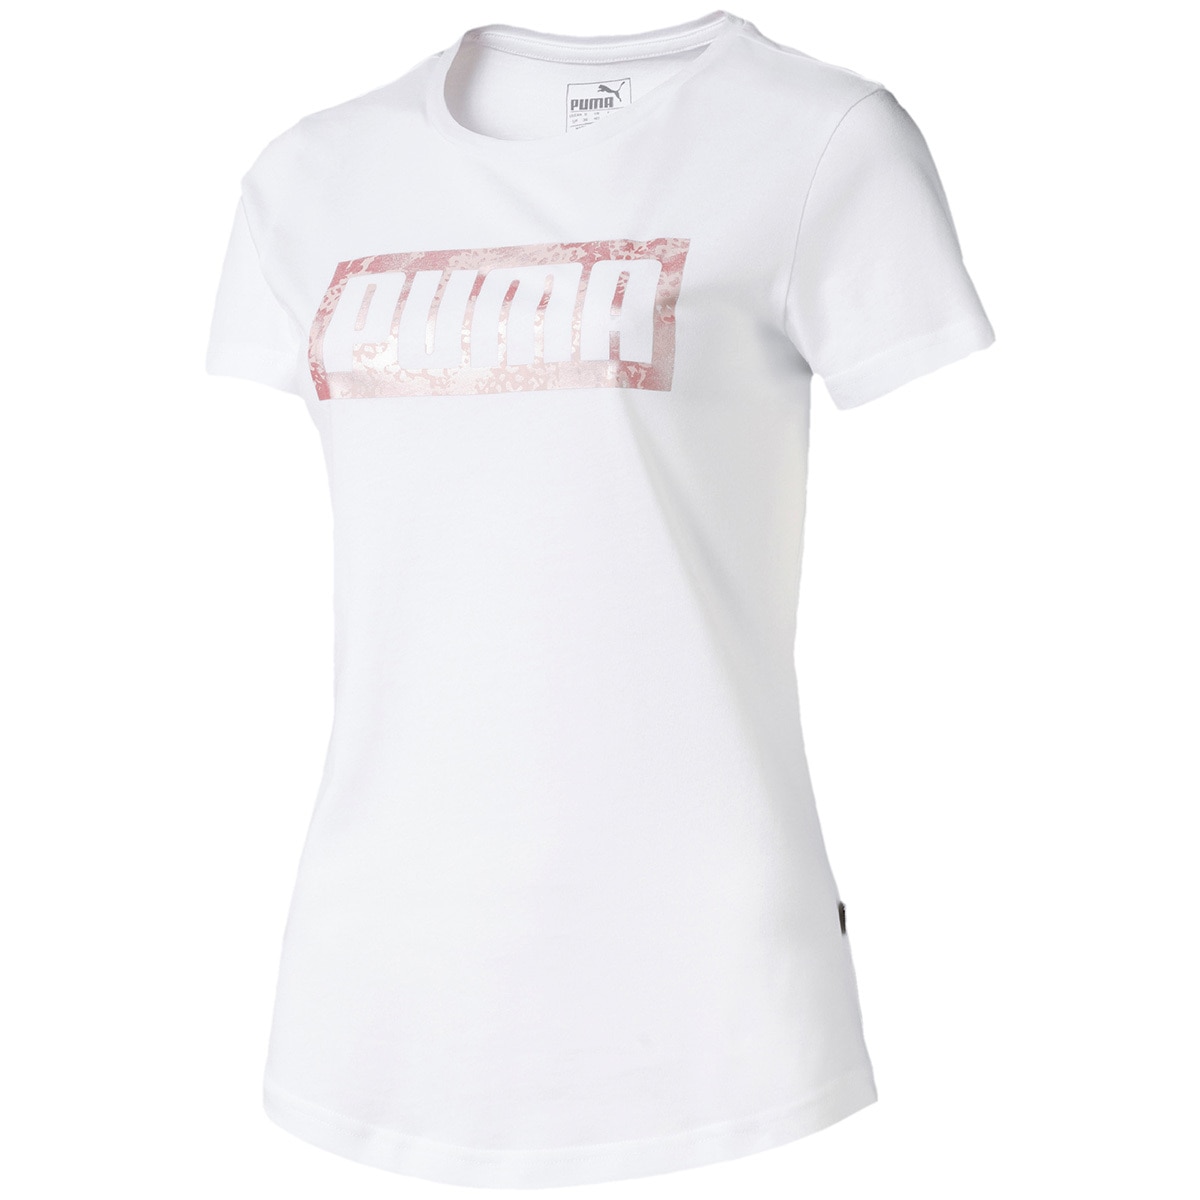 white puma t shirt women's